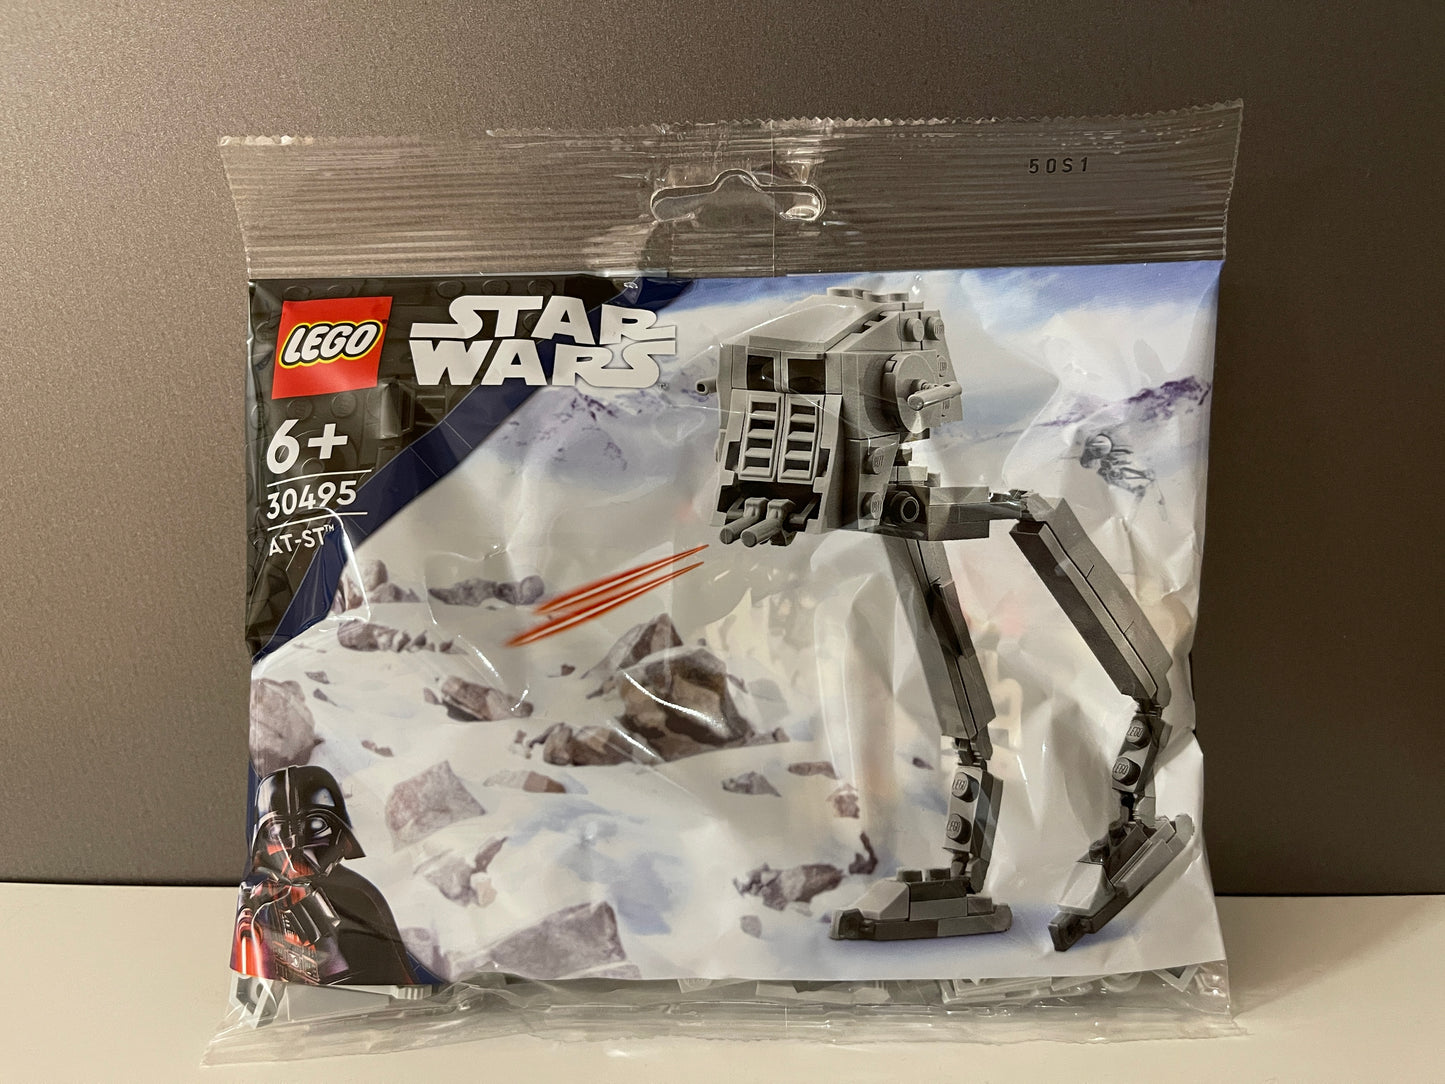 LEGO Star Wars "AT-ST / ATST" Polybag (30495)